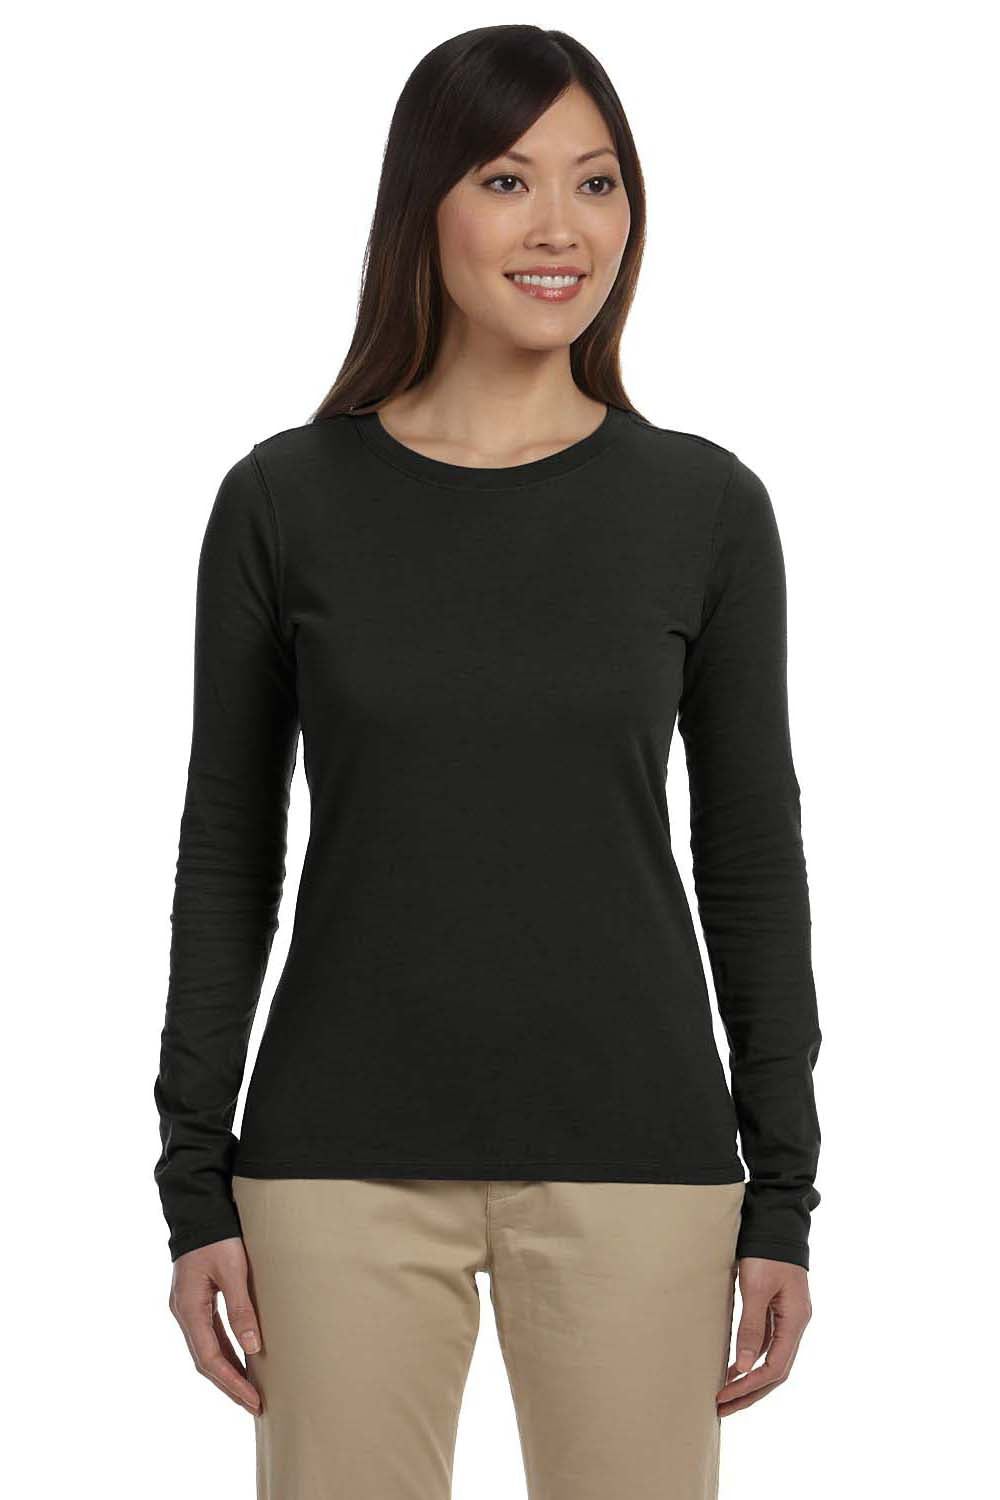 Econscious EC3500 Womens Long Sleeve Crewneck T-Shirt Black Front